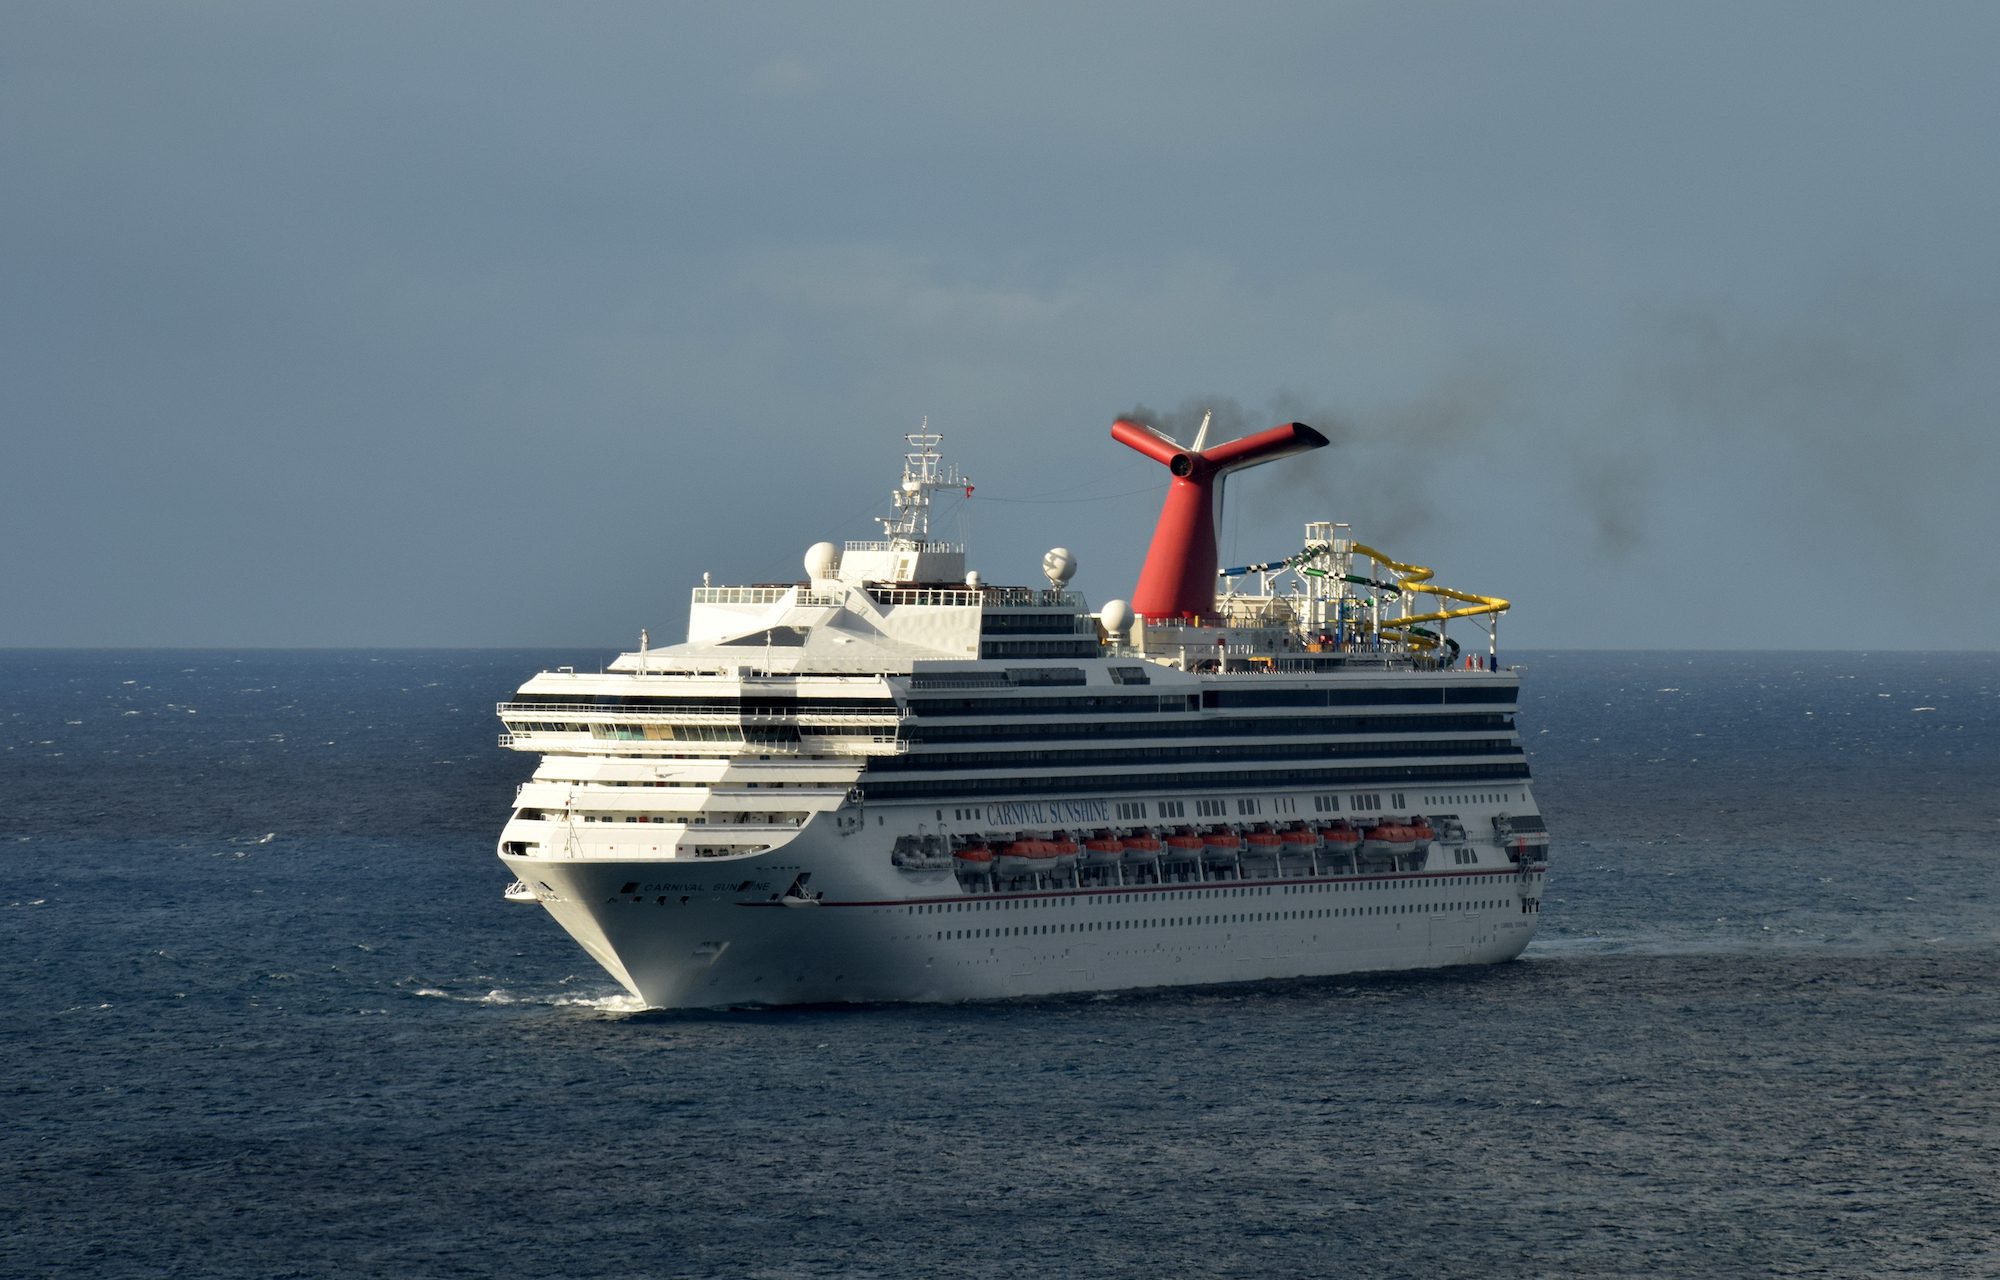 Carnival Sunshine cruise ship underway at sea